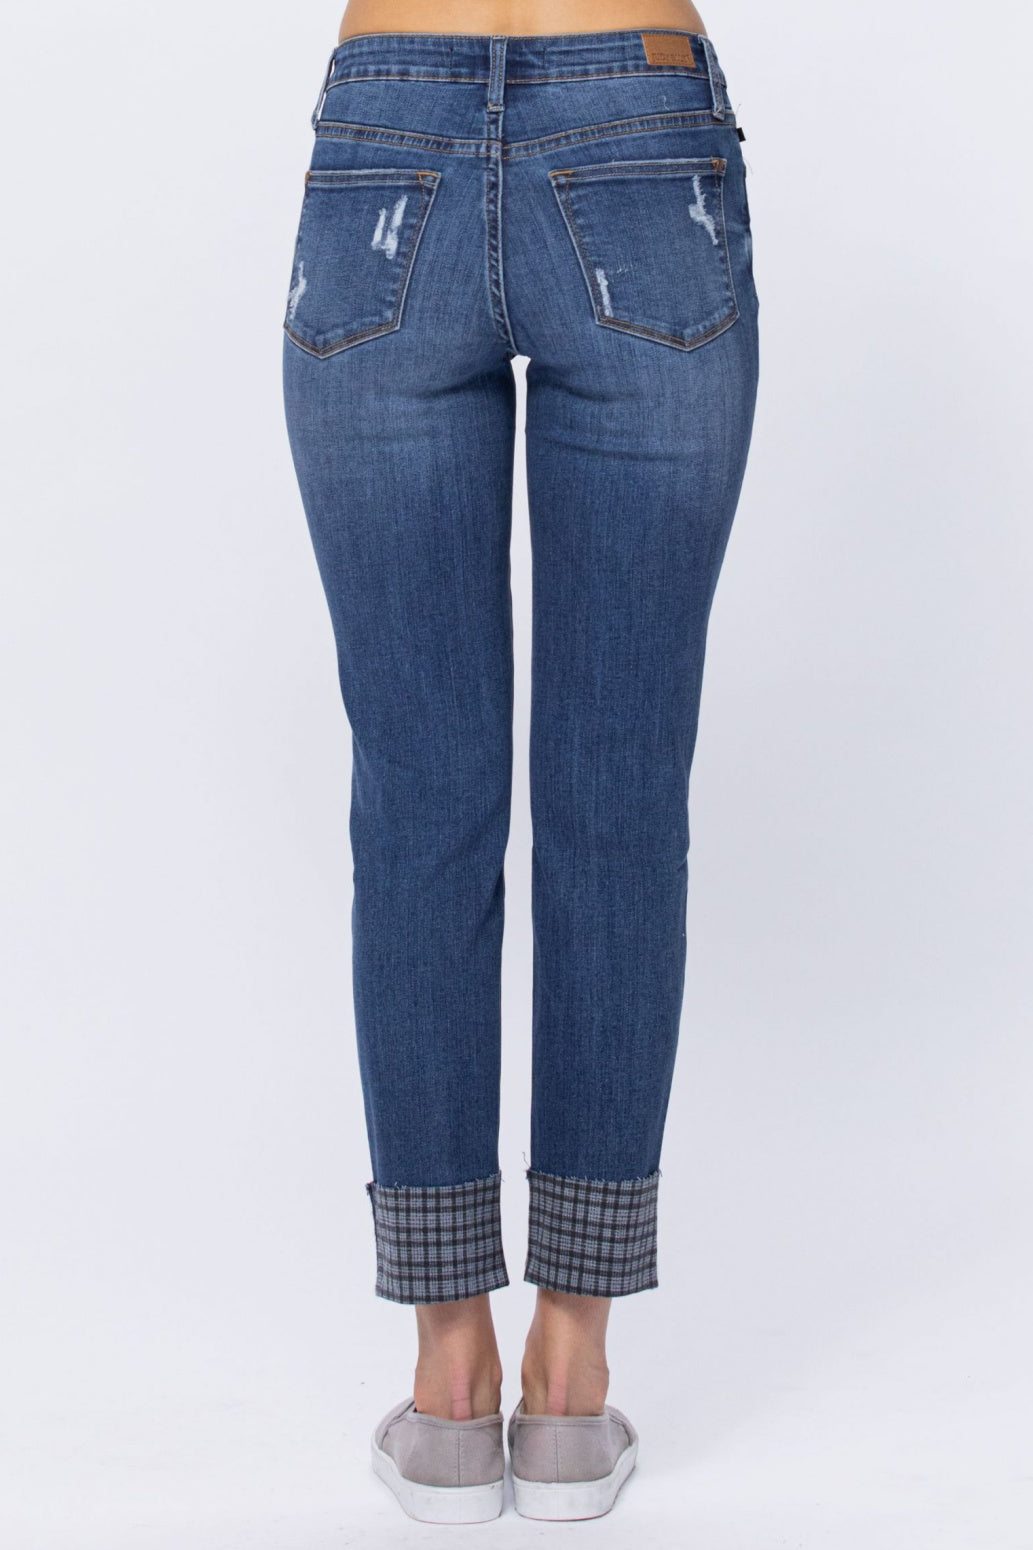 Judy Blue Grey Plaid Cuffed Slim Fit Mid Rise Jeans Style 88358